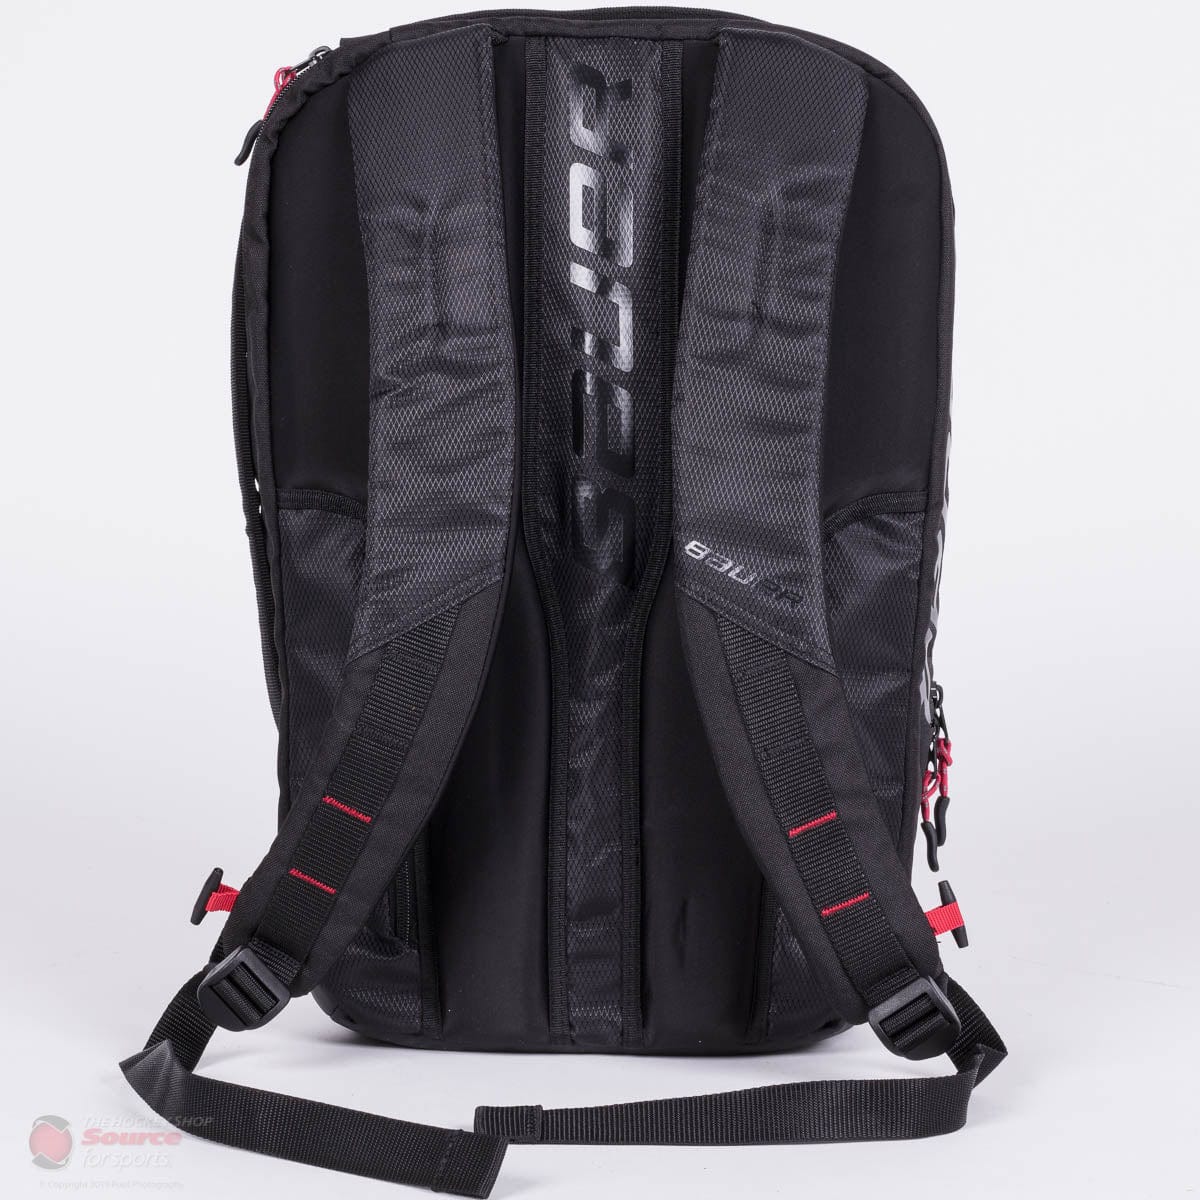 Bauer Laptop Backpack